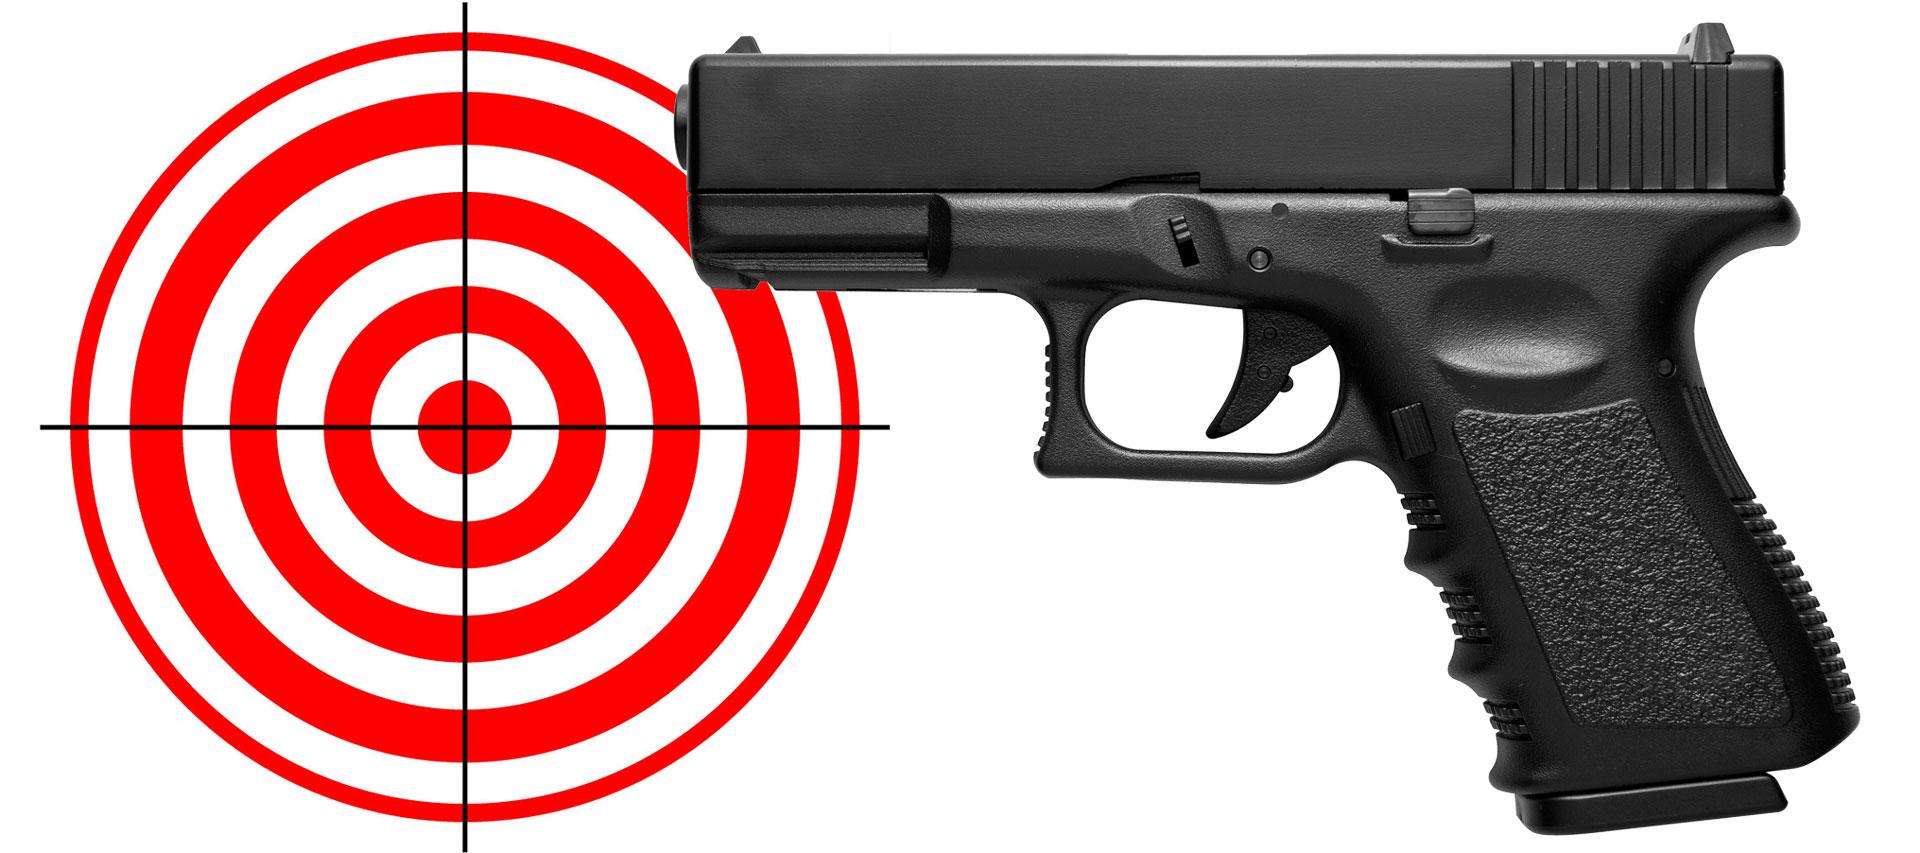 Tips on shooting accuracy